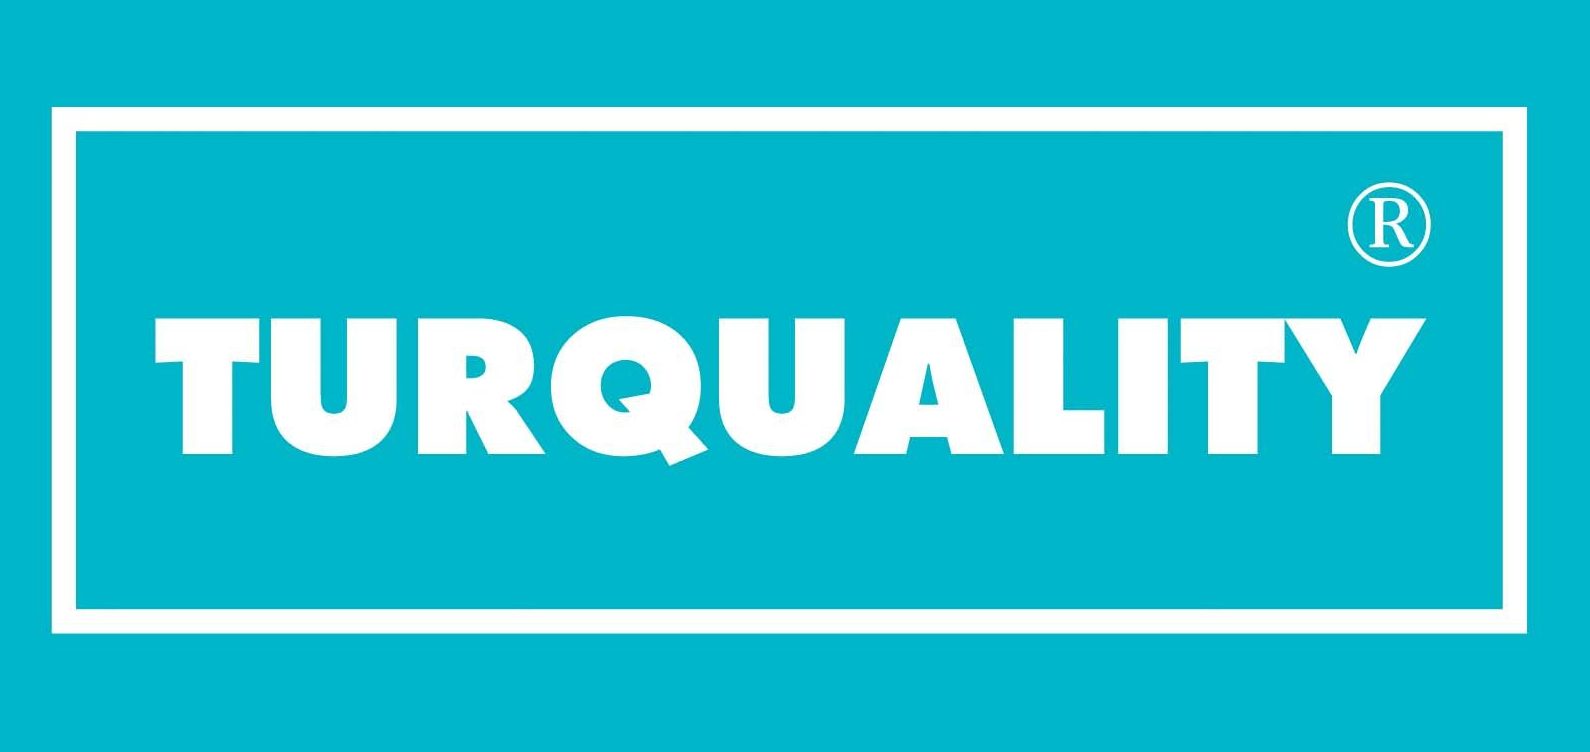 turqualty-logo-e1484980226639.jpg